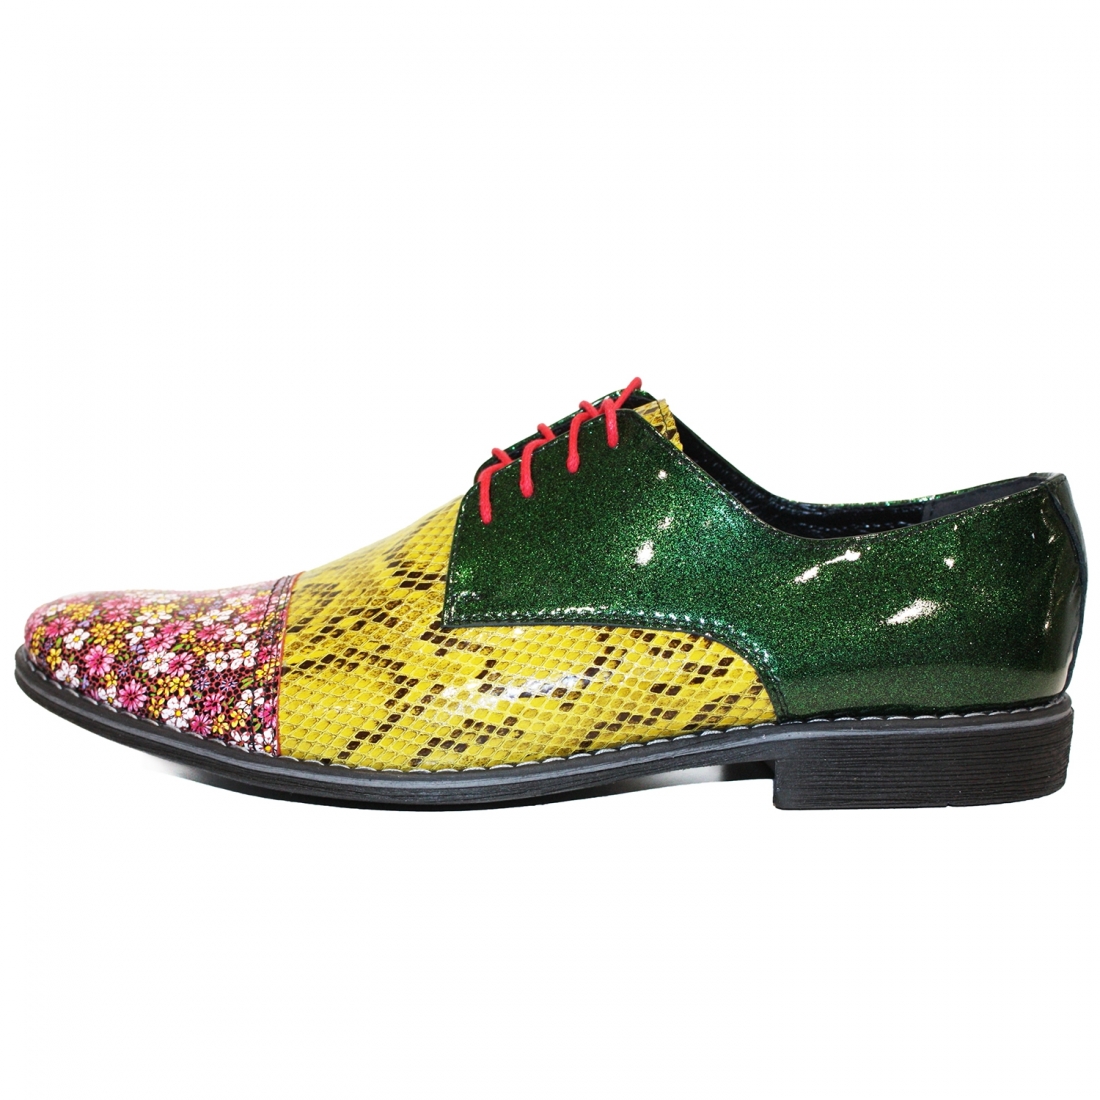 Modello Mixare - Zapatos Clásicos - Handmade Colorful Italian Leather Shoes